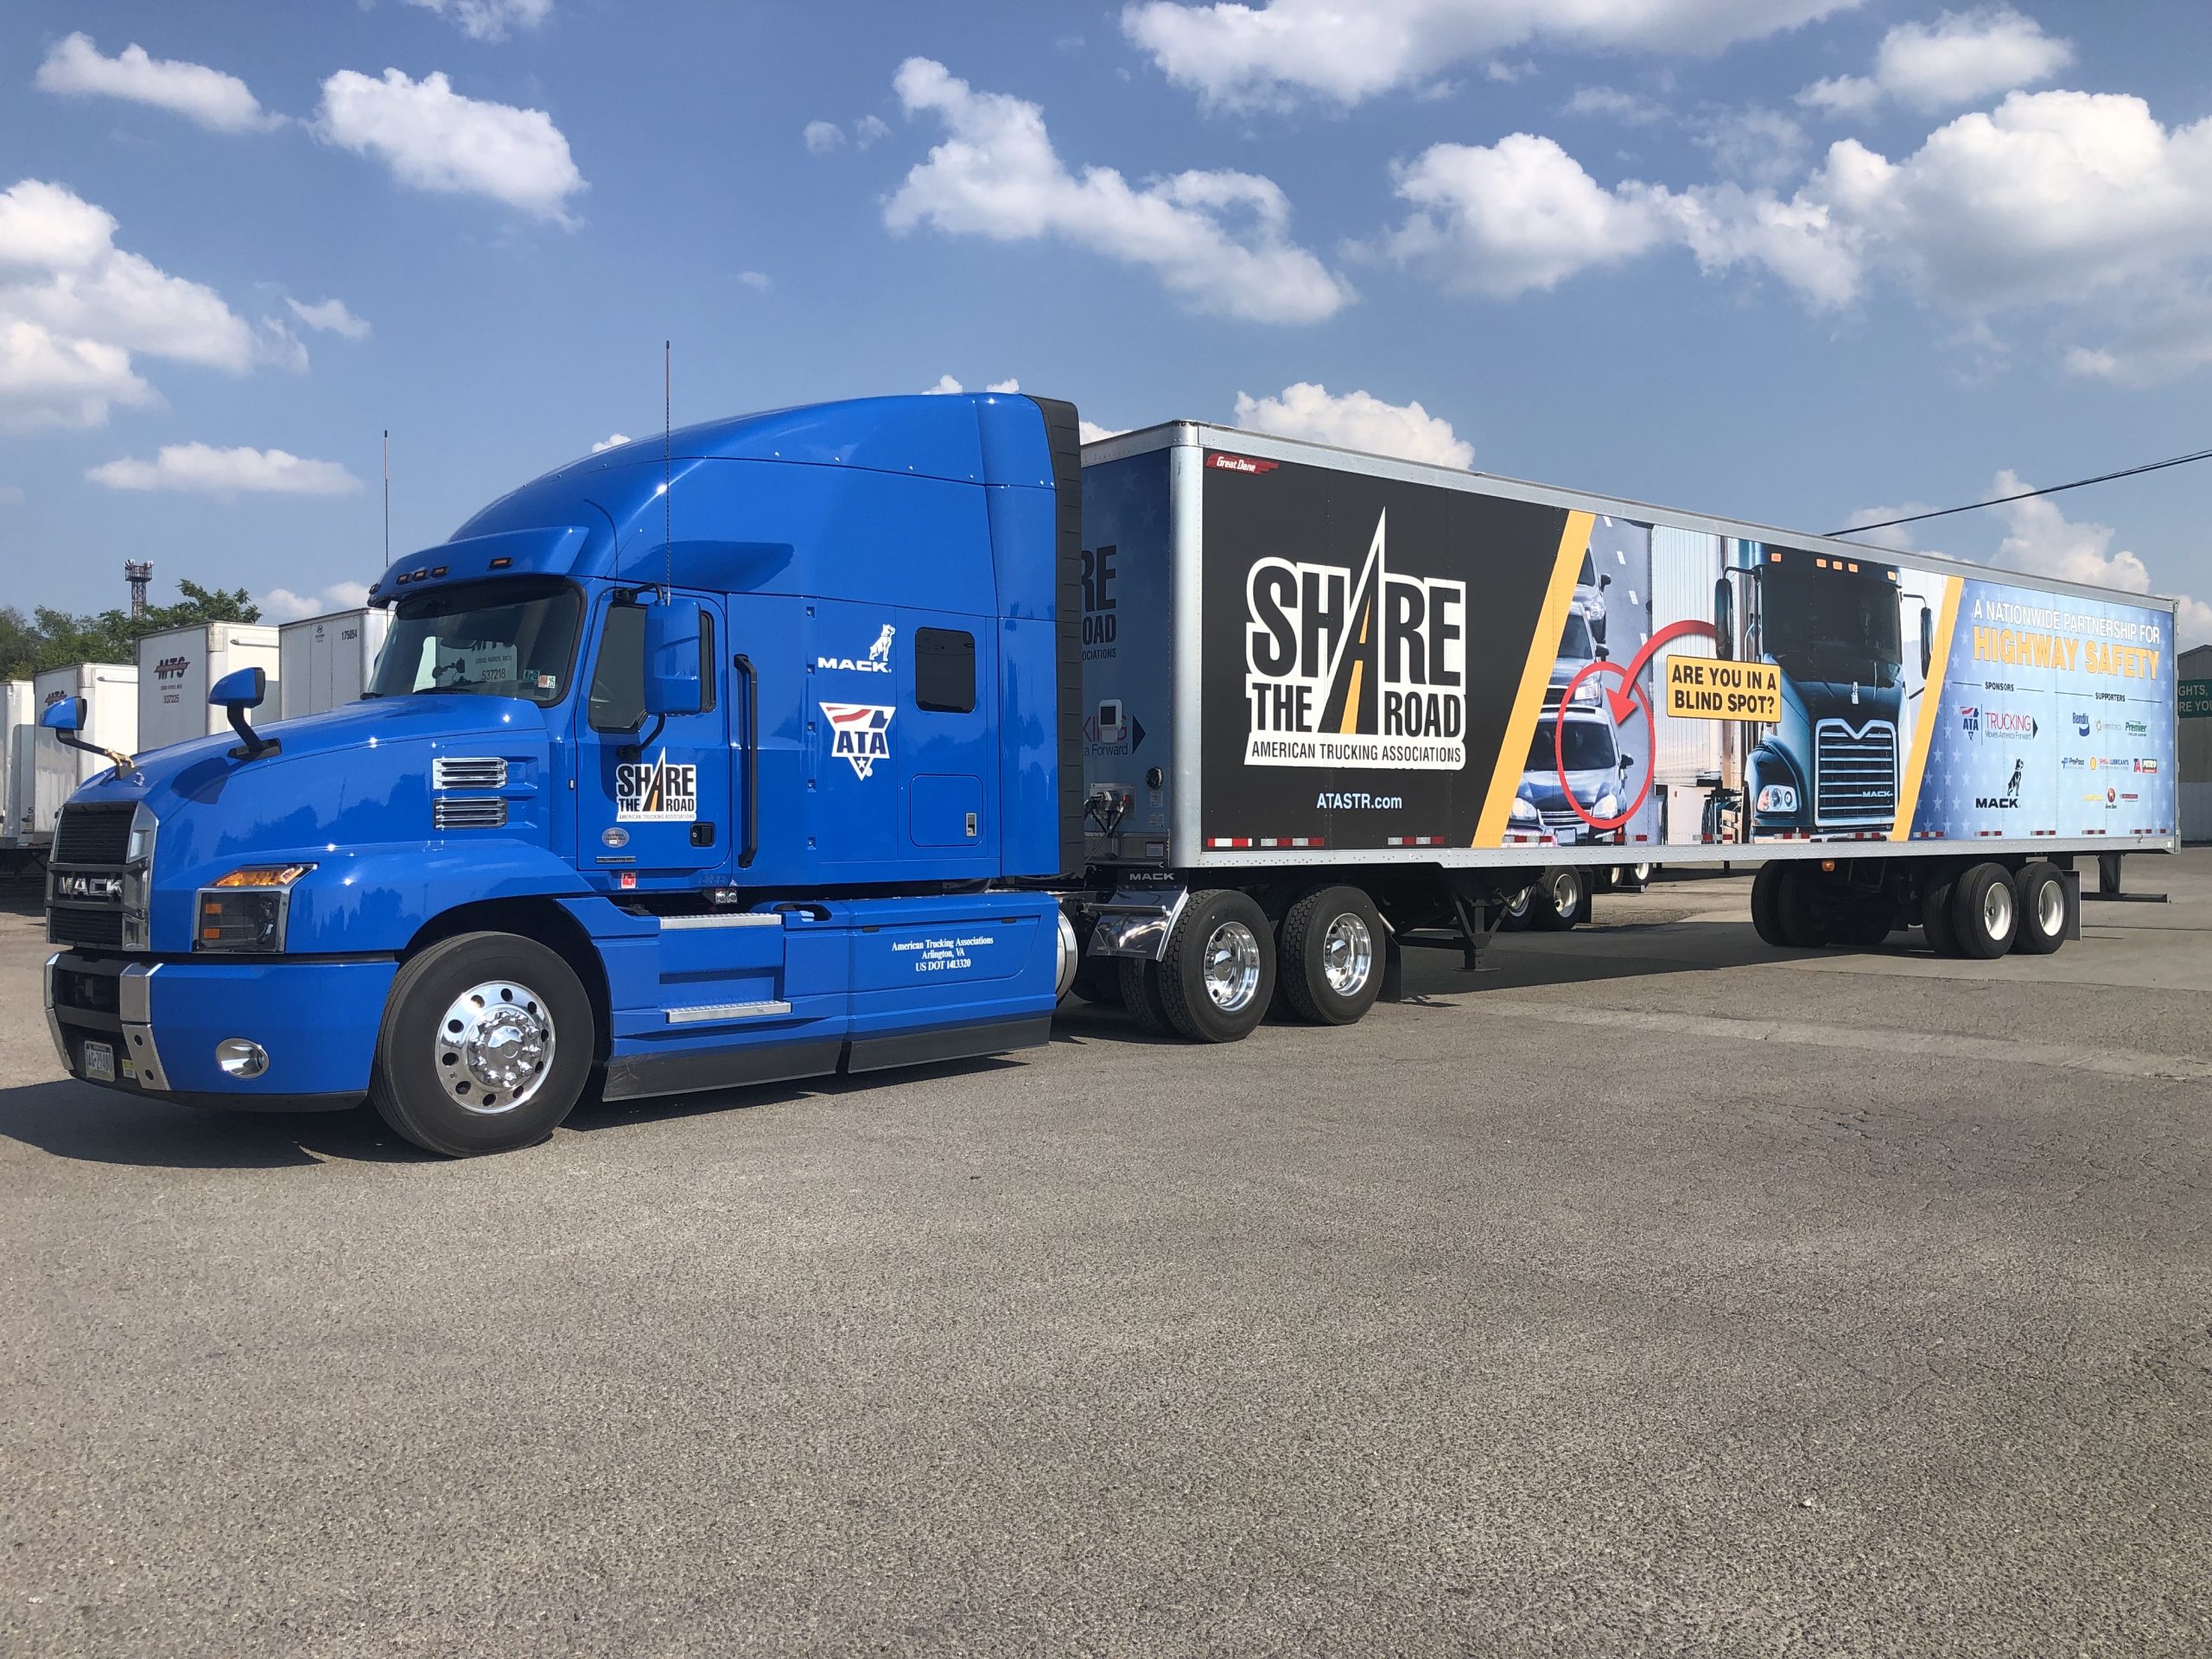 American Trucking Association Explore USA